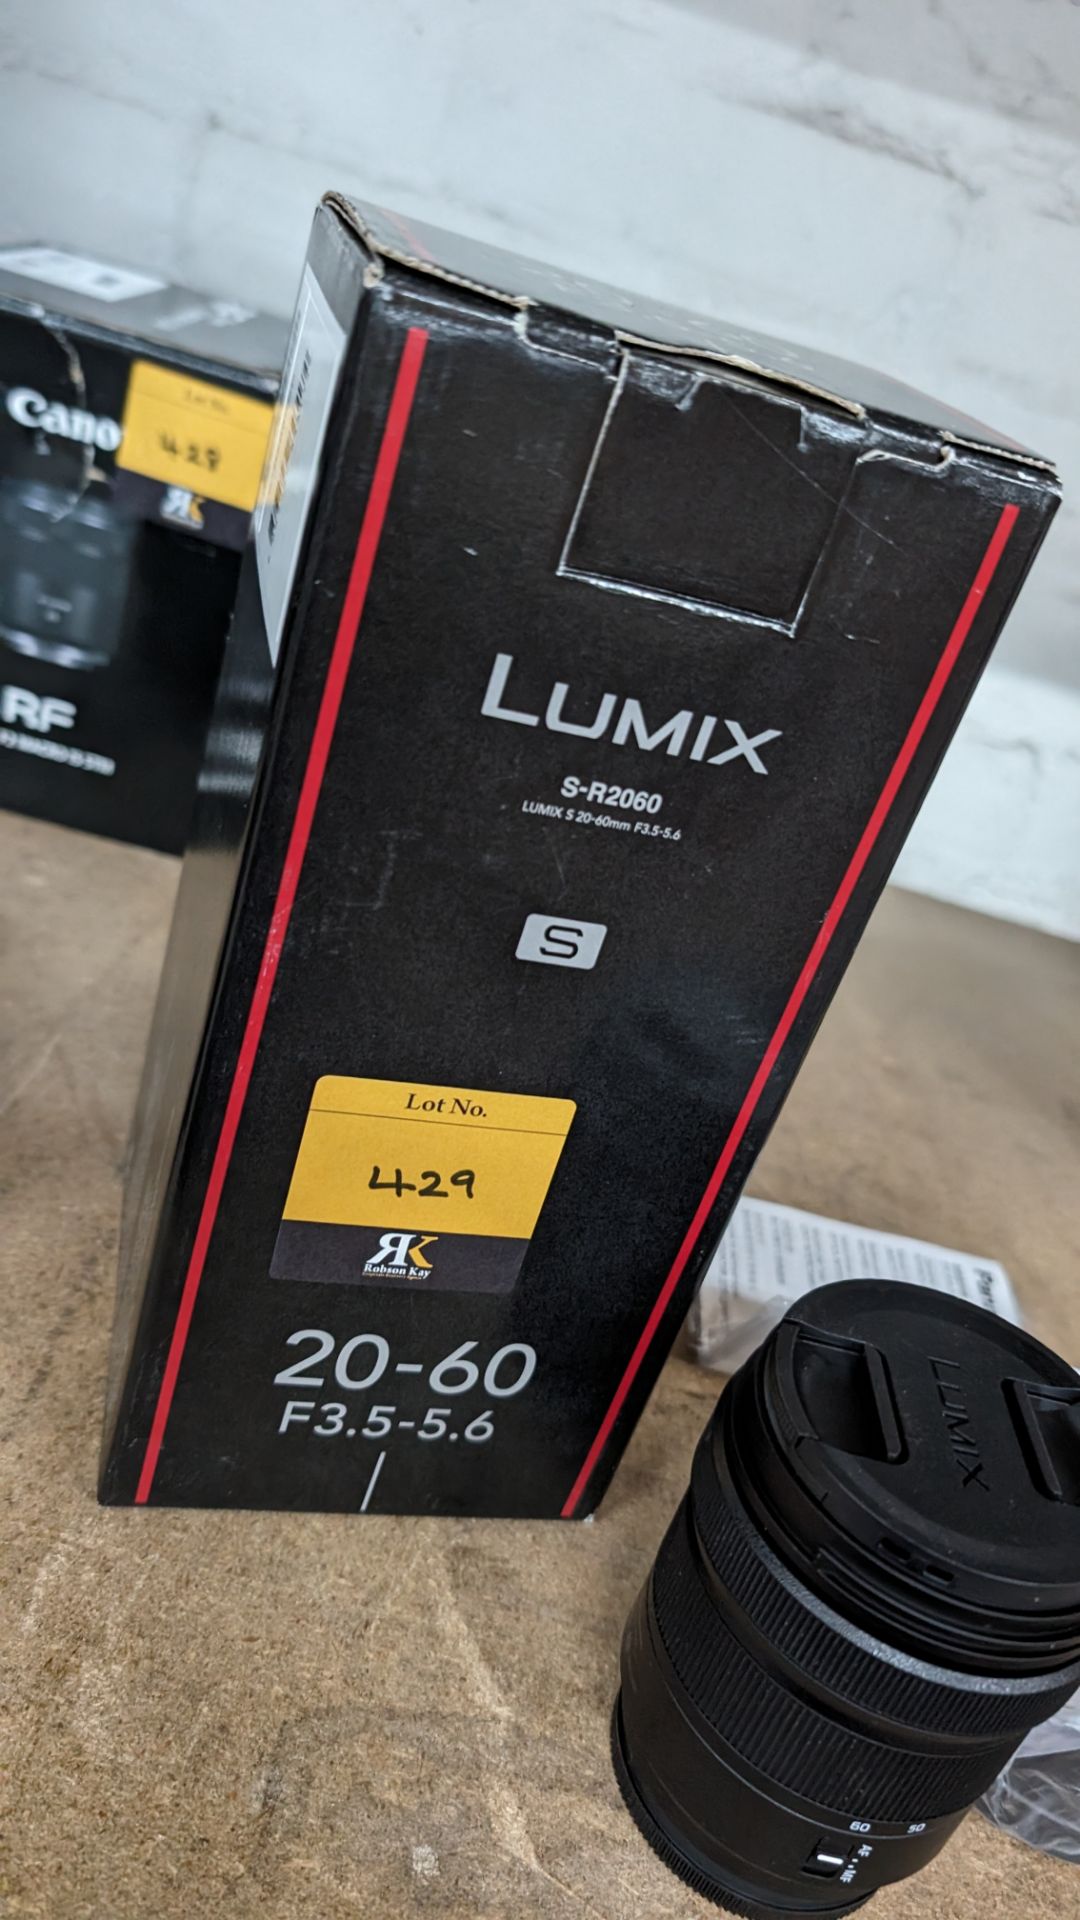 Panasonic Lumix model S-R2060 lens, 20-60mm, f3.5-5.6 - Bild 11 aus 14